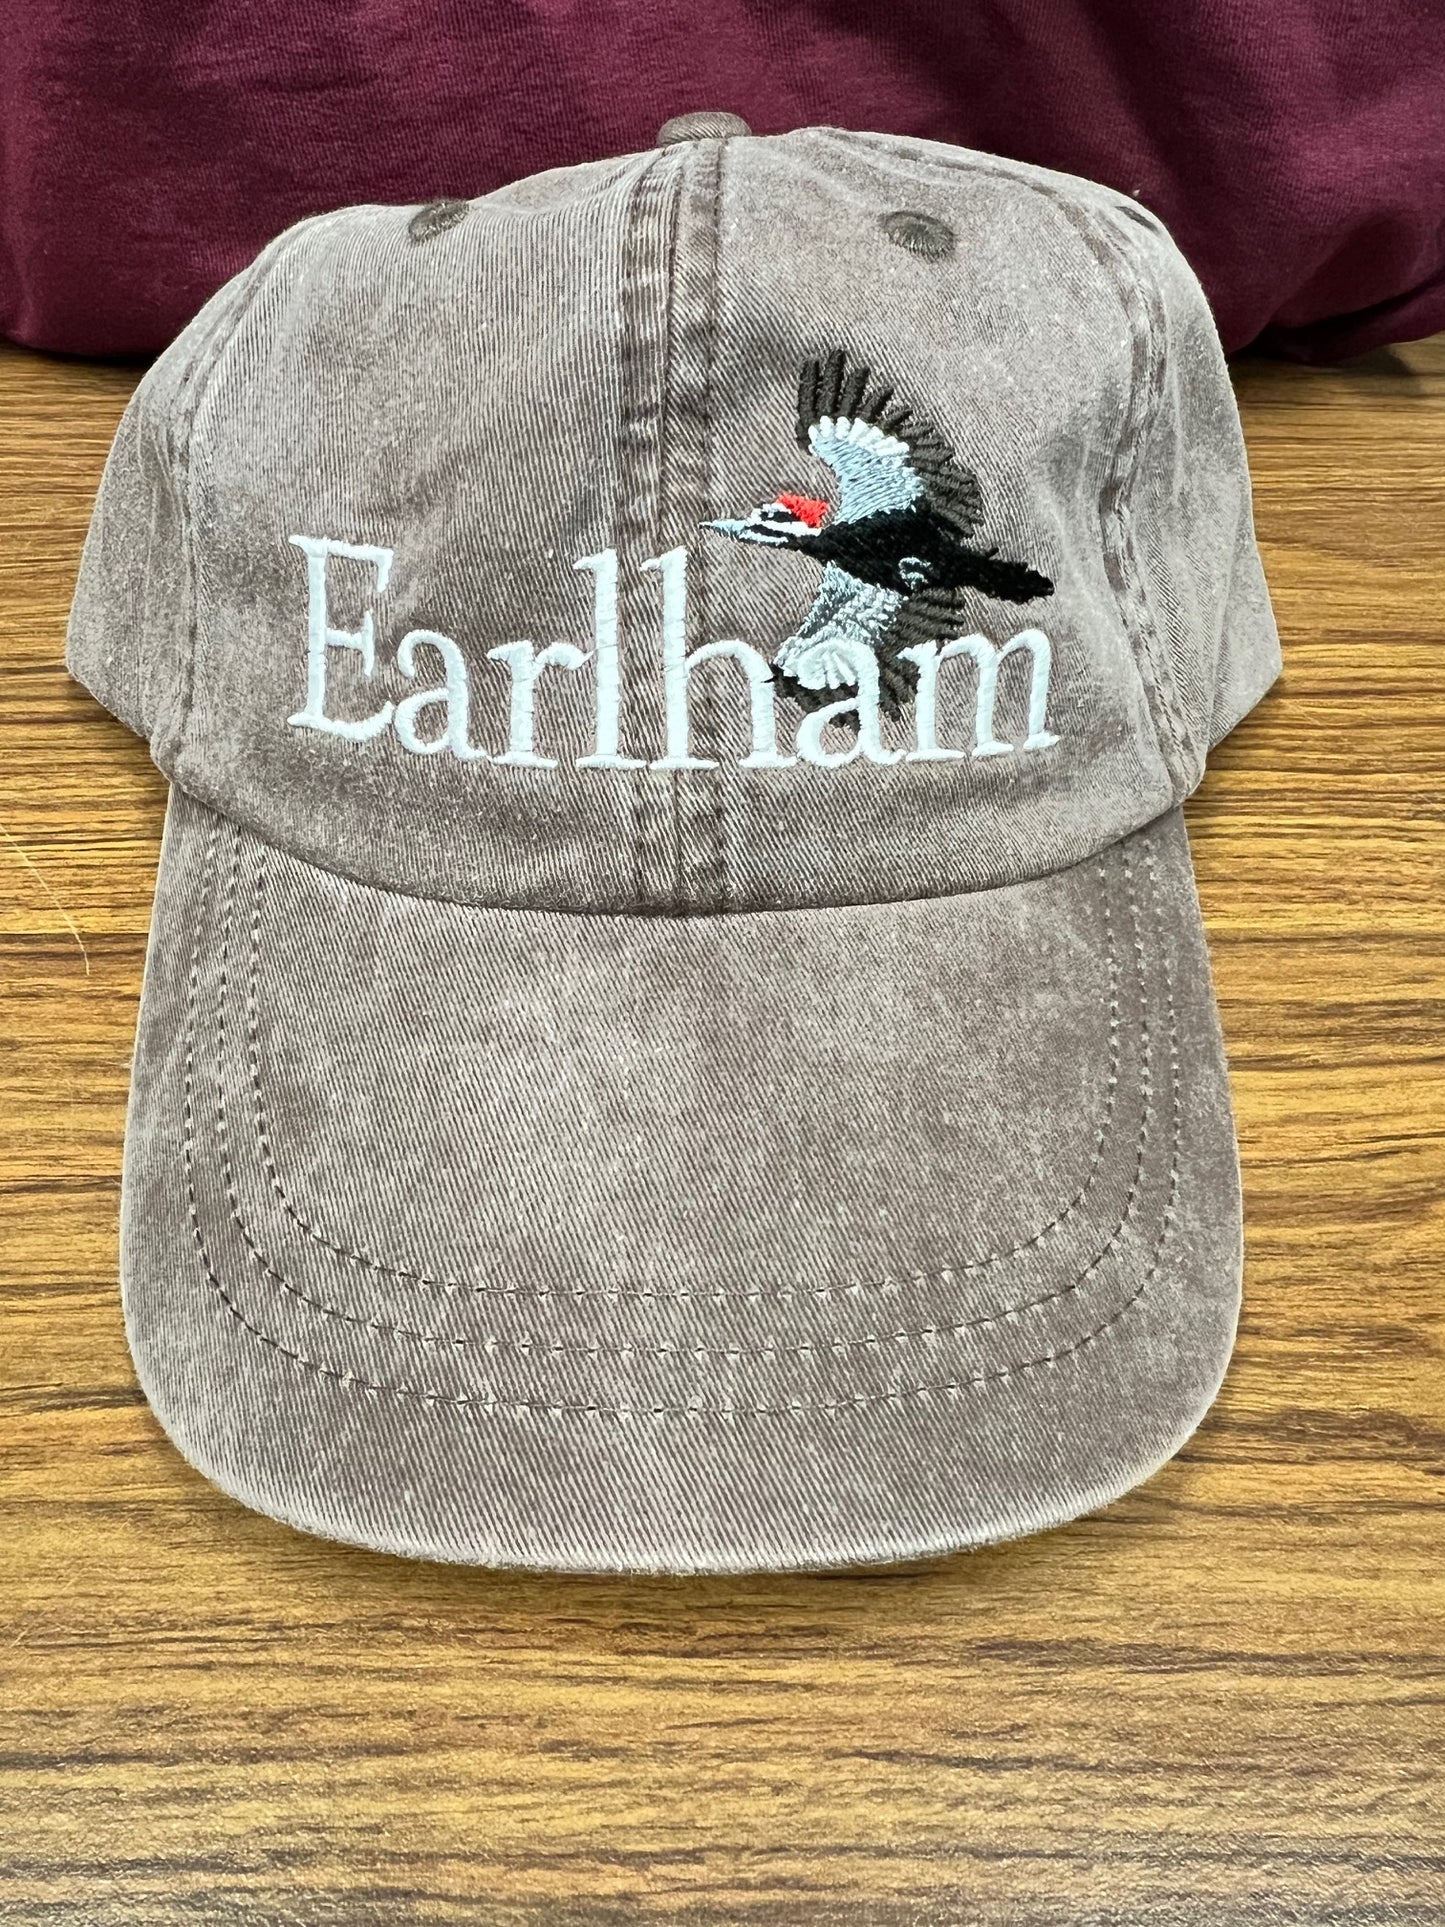 Earlham Birding Hat (Espresso, Woodpecker)